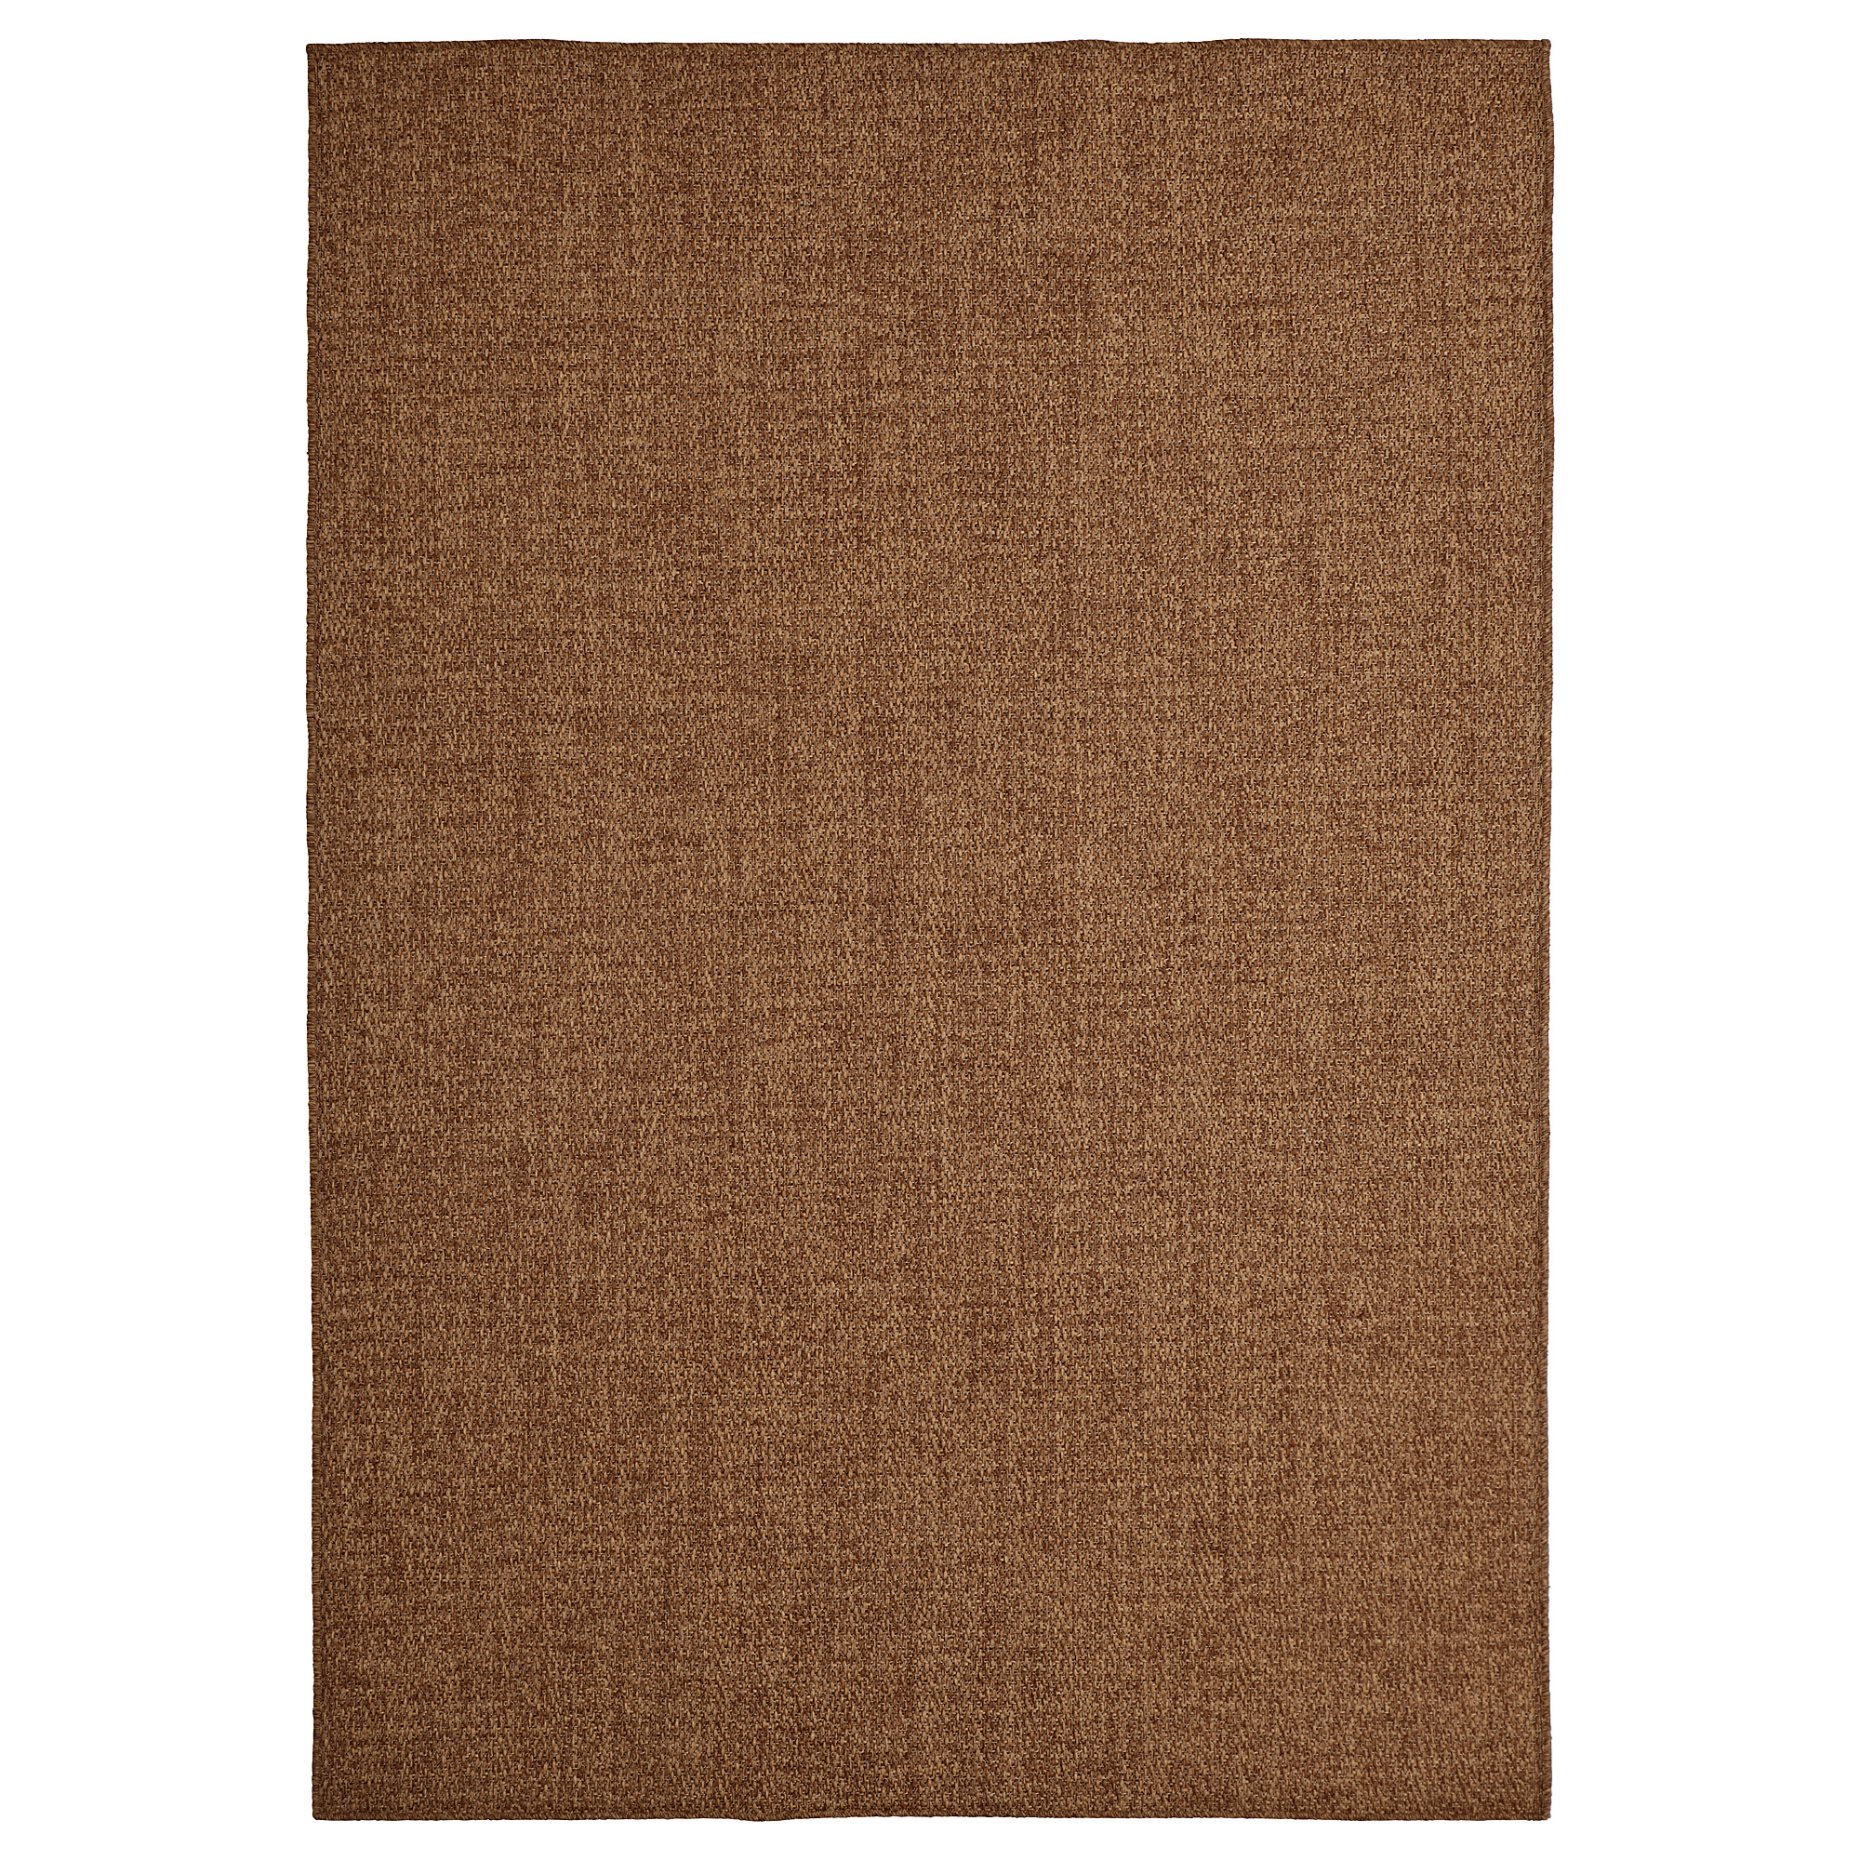 LYDERSHOLM, χαλί χαμηλή πλέξη, εσωτερικού/εξωτερικού χώρου, 160x230 cm, 204.954.15